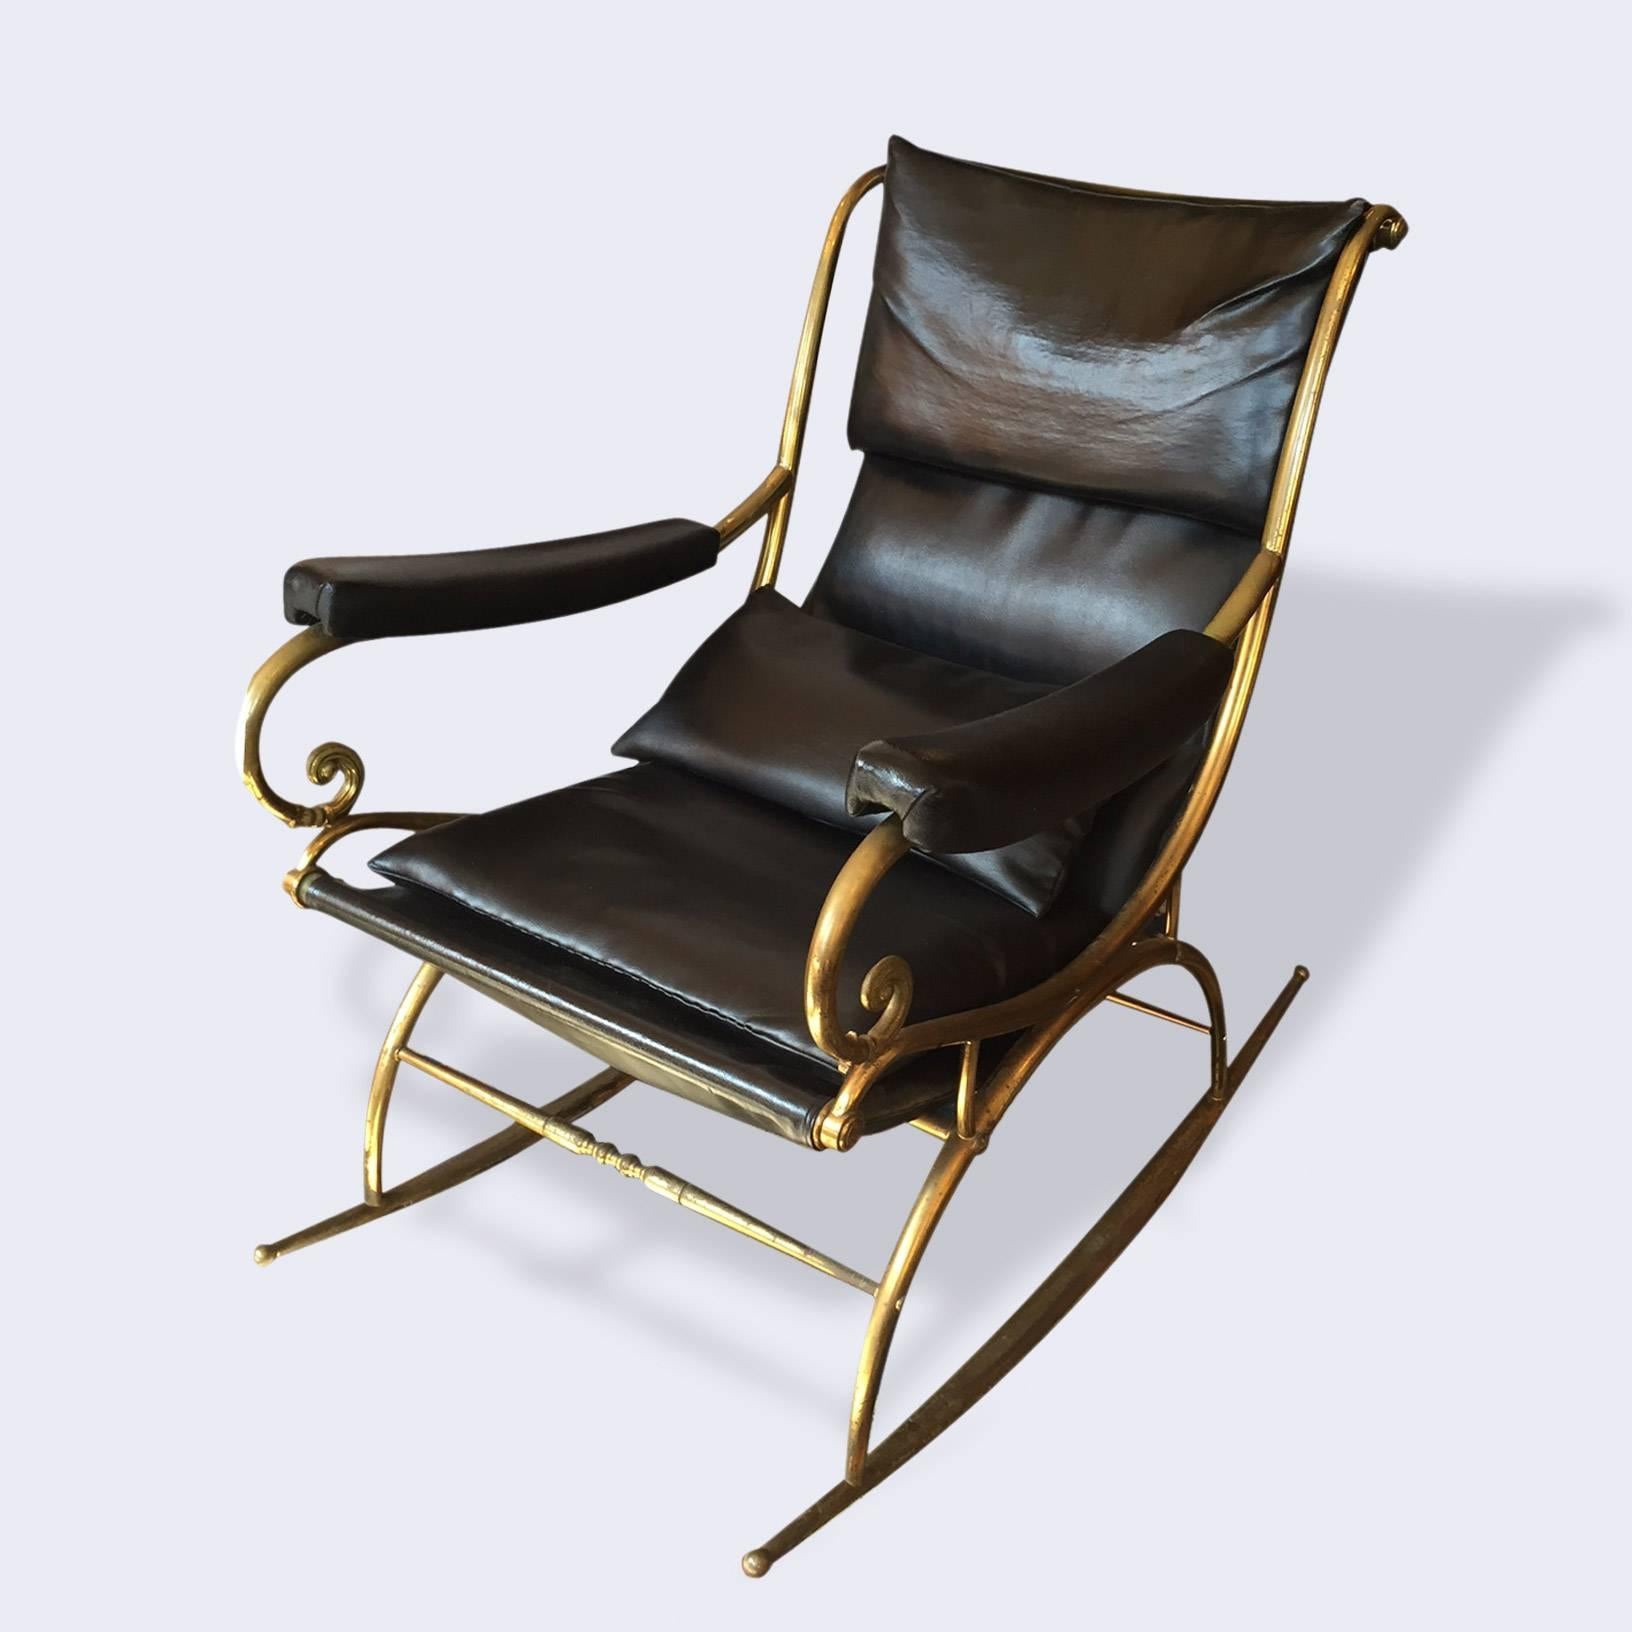 Very rare 19th century brass rocking chair with minimal rock.